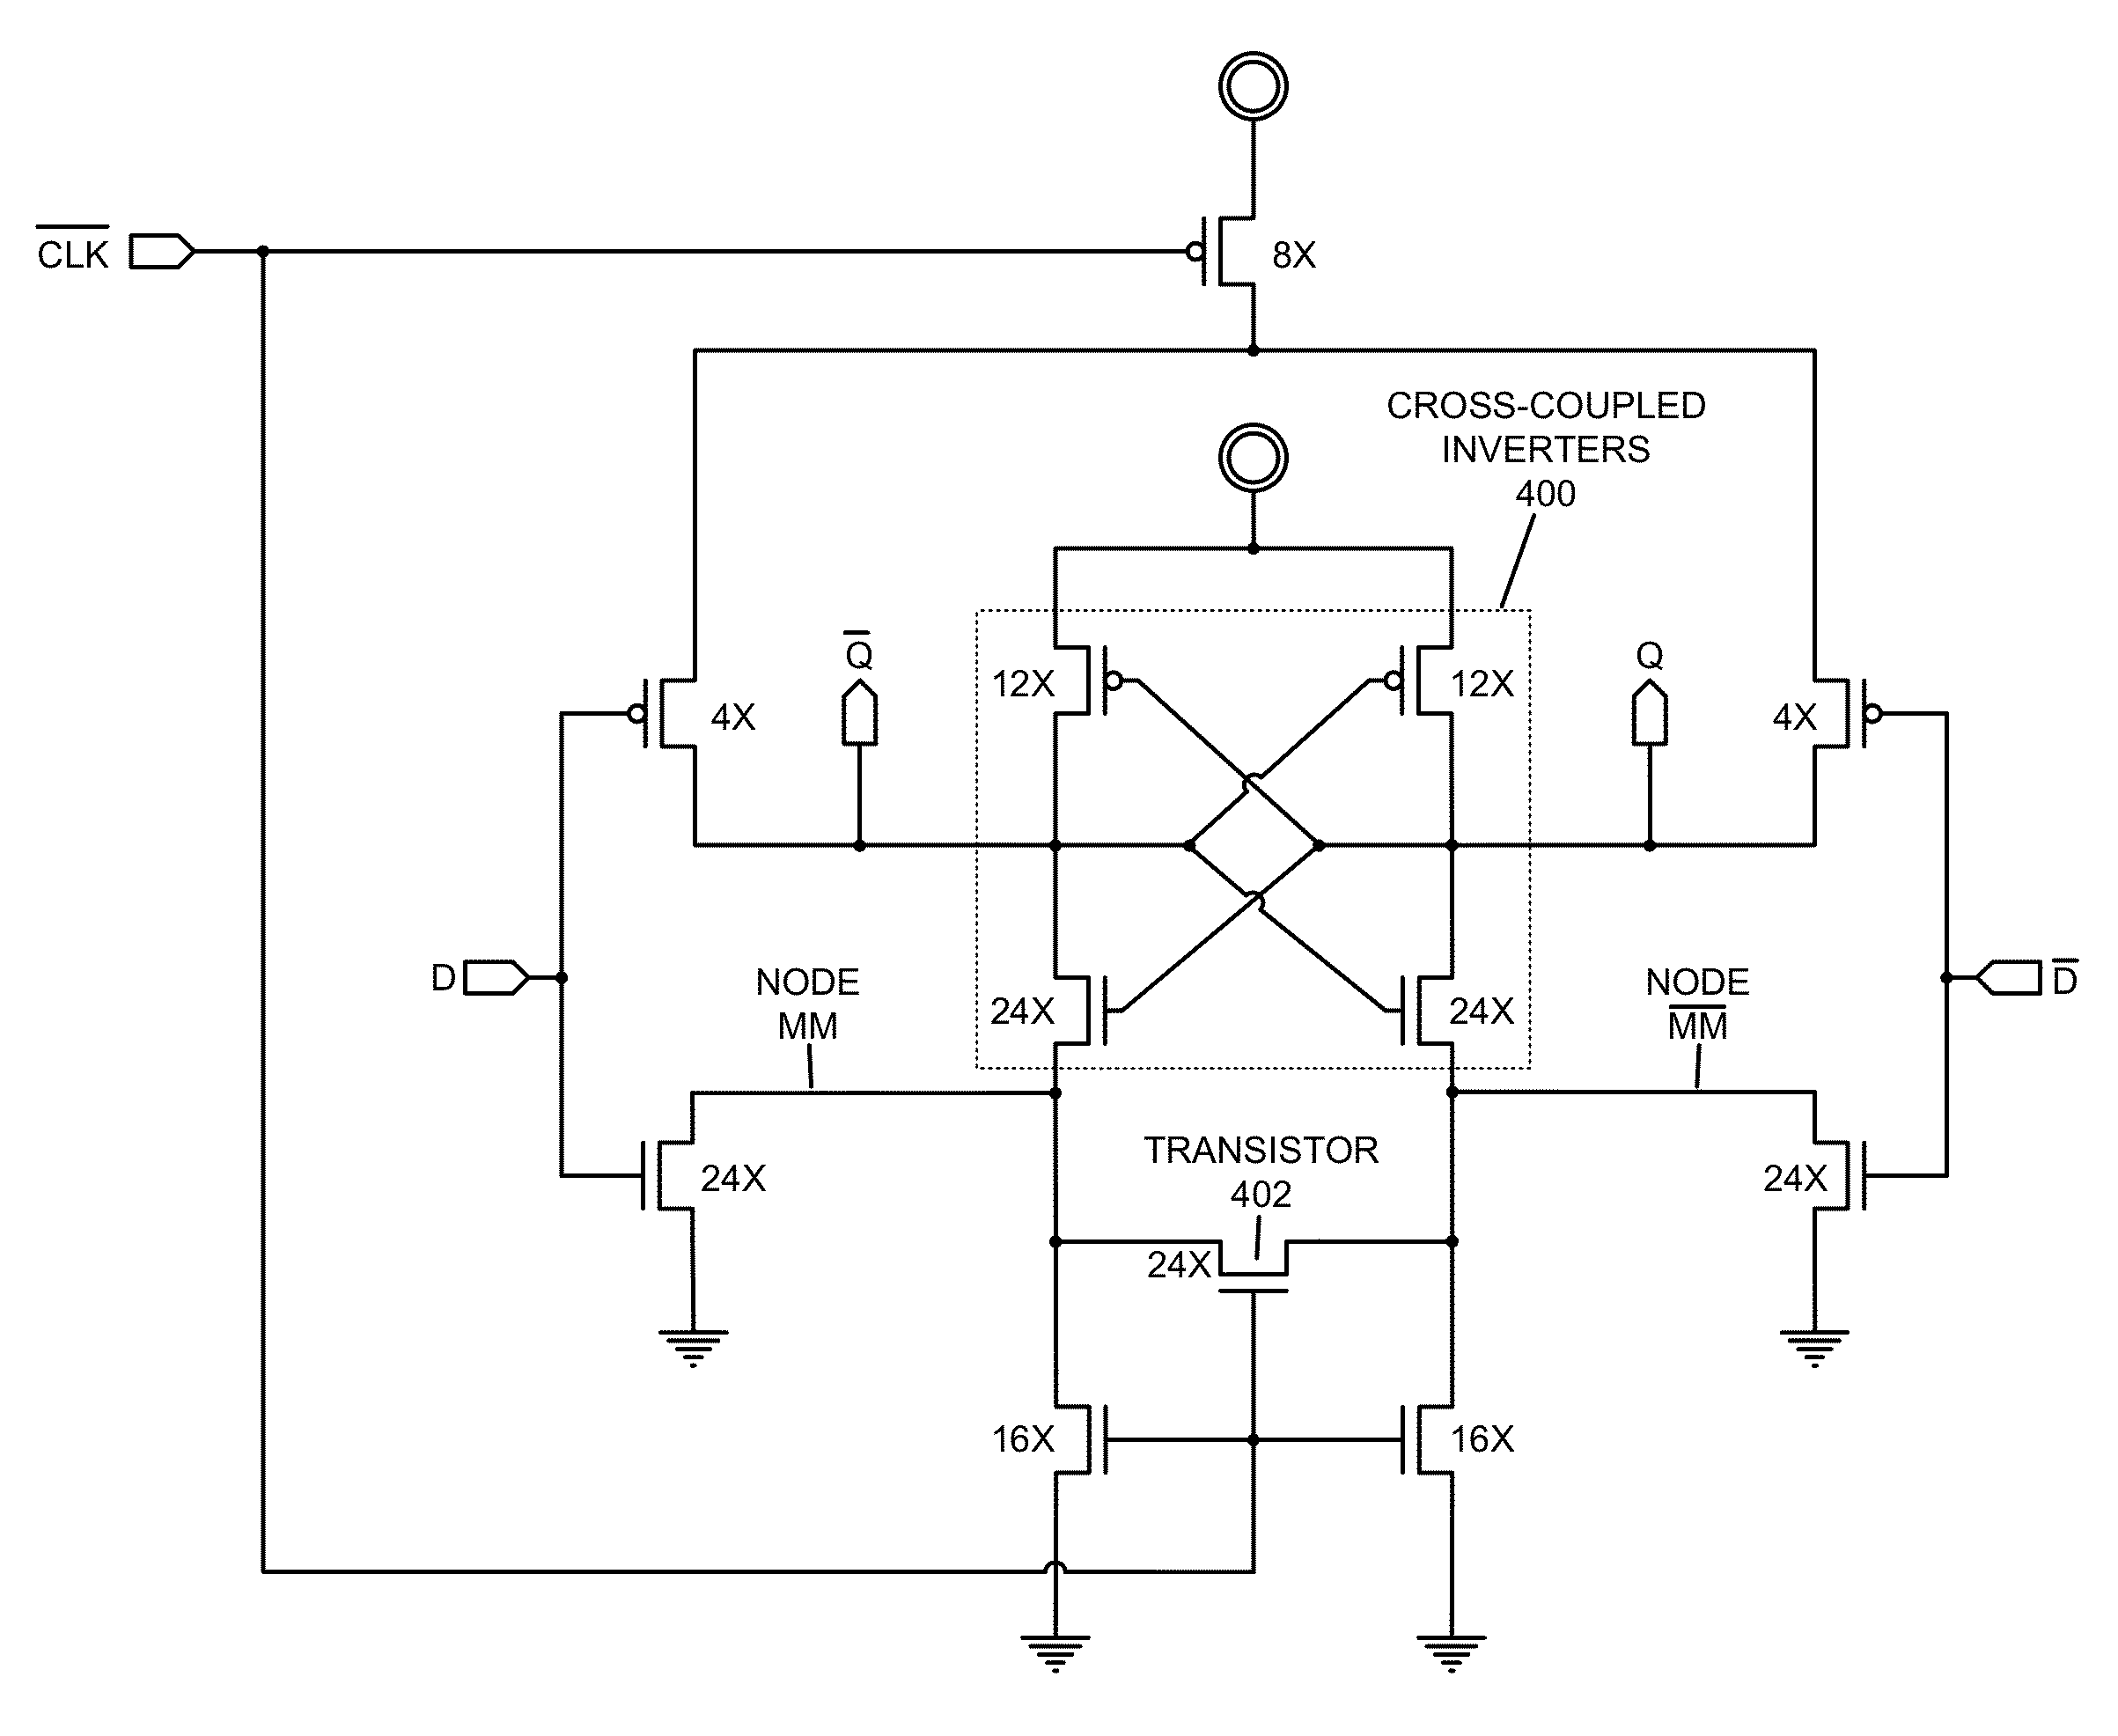 Synchronizer latch circuit that facilitates resolving metastability